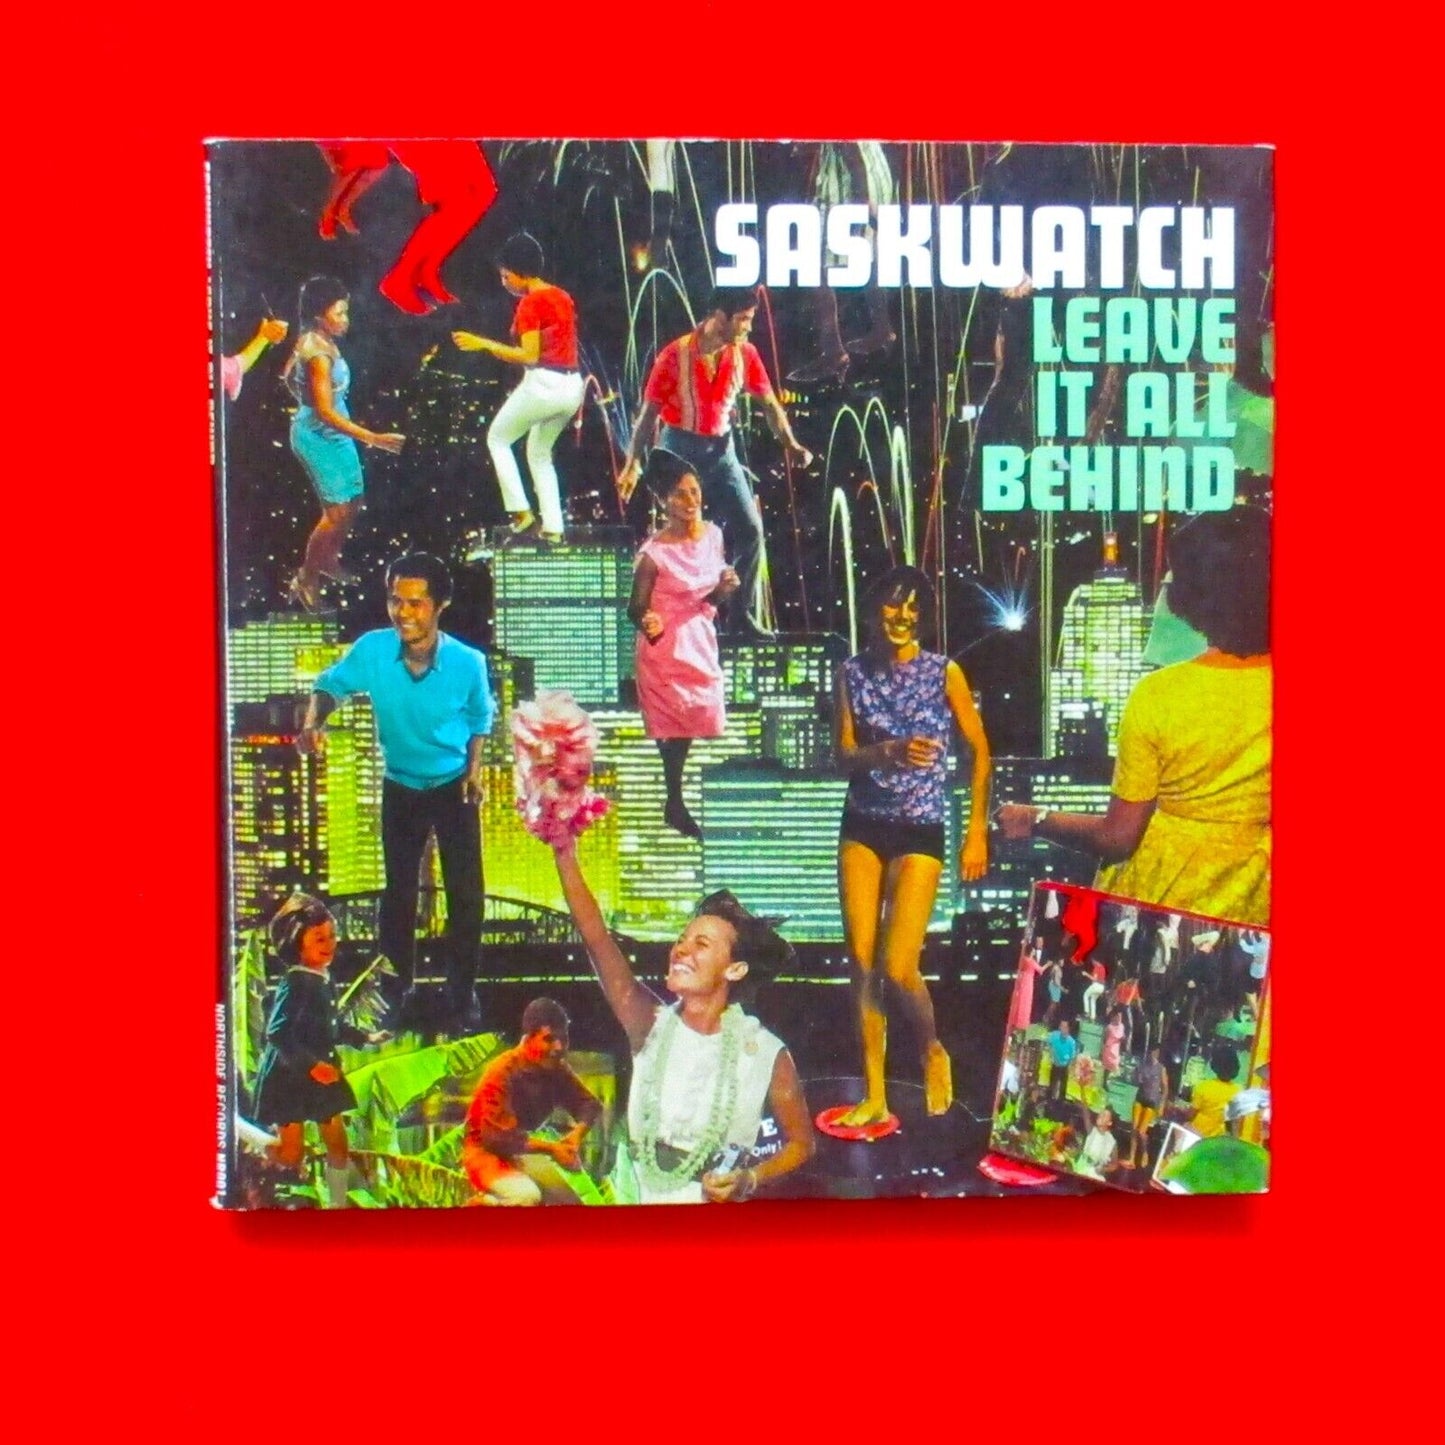 Saskwatch Leave It All Behind 2013 CD Album Funk Soul Australian